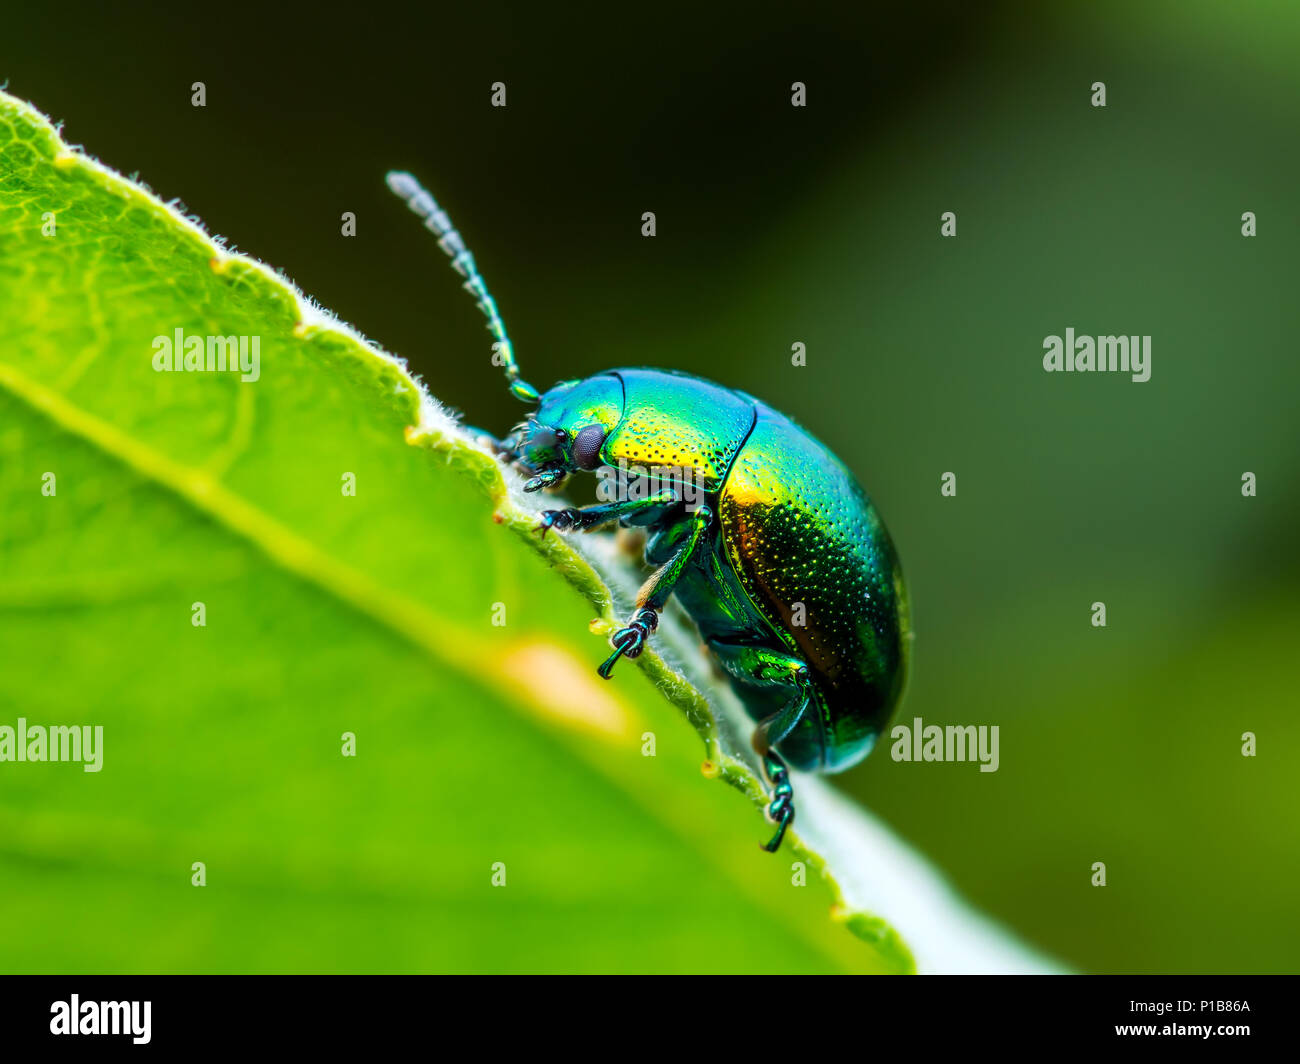 Chrysolina Coerulans Blue Mint Leaf Beetle Insect Crawling on Green Leaf Macro Stock Photo